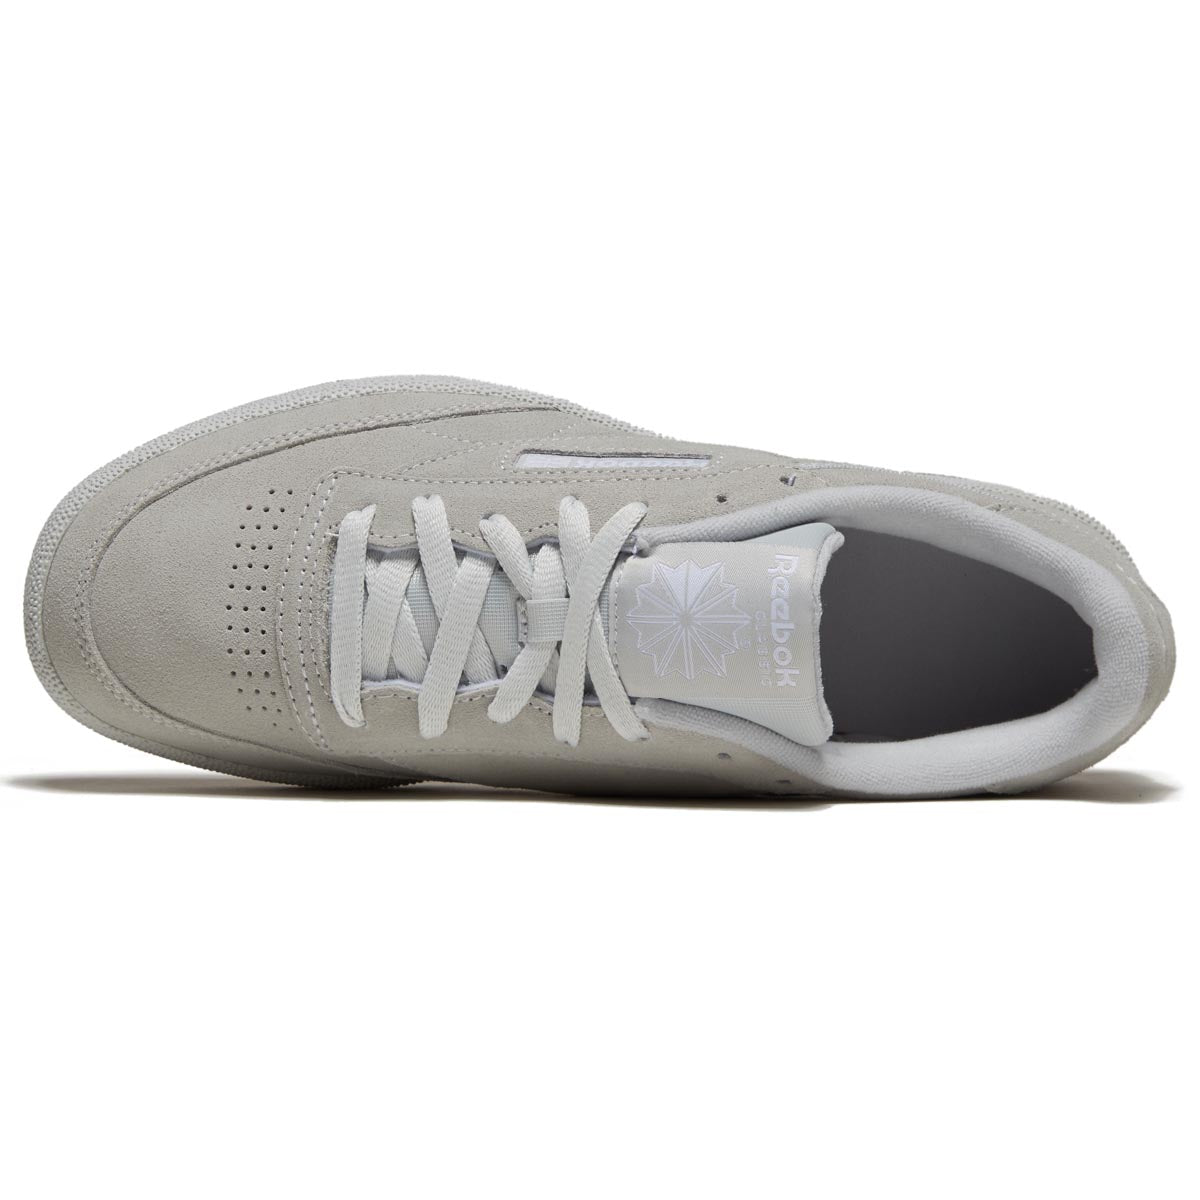 Reebok Club C 85 Shoes - Pure Grey/White image 3